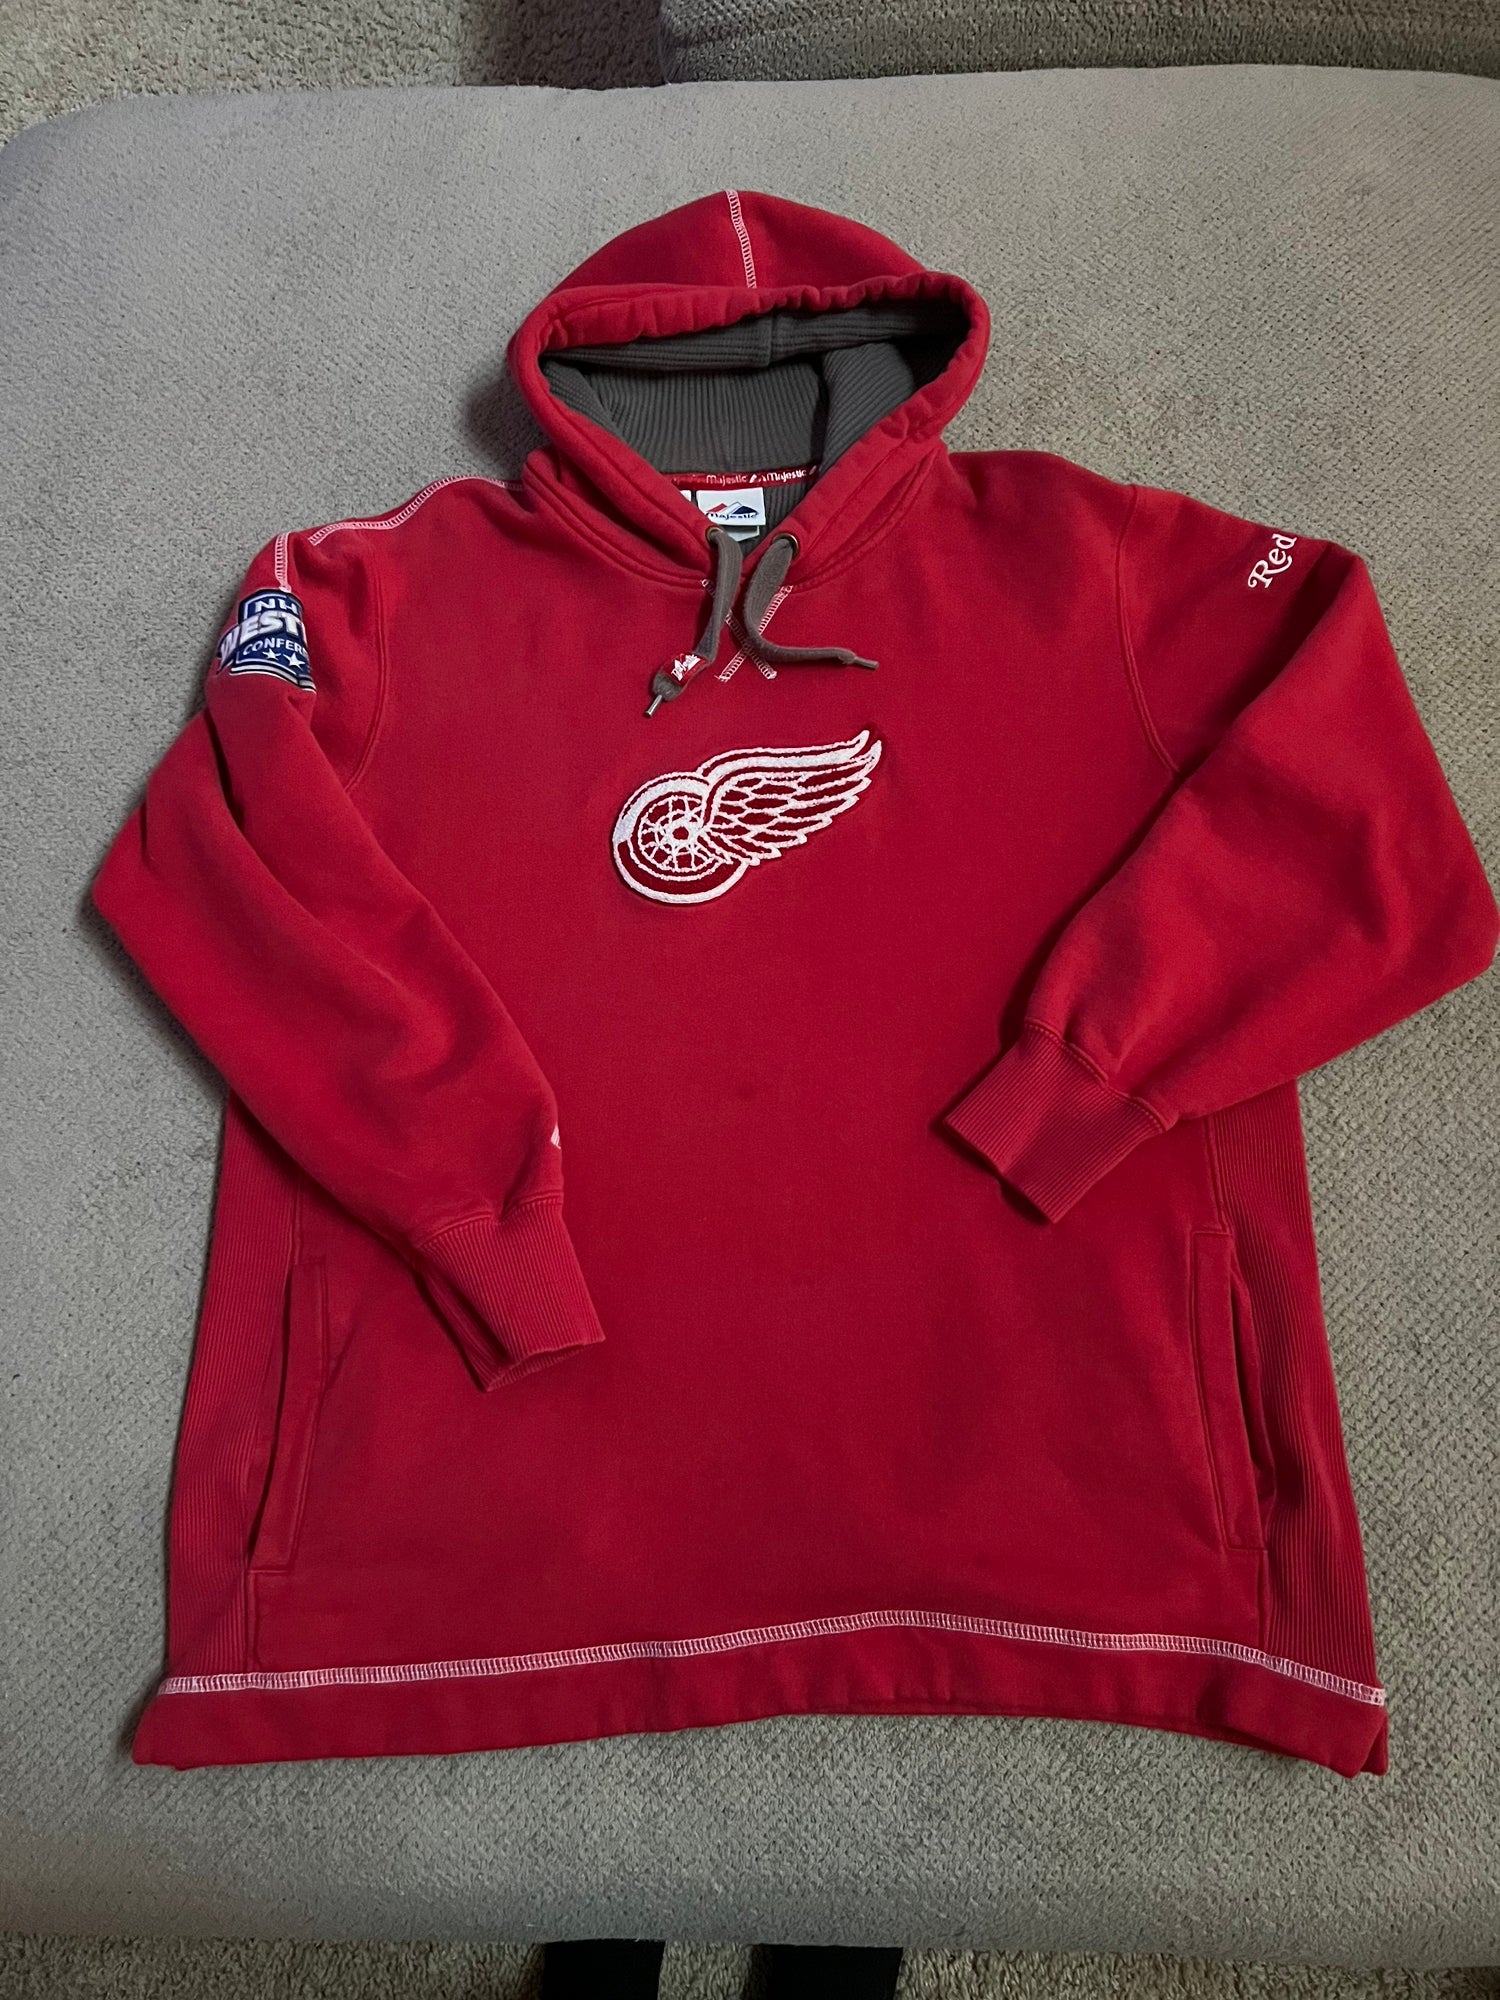 Detroit Red Wings Mens Grey Signature Blocked Hood Fashion Hood